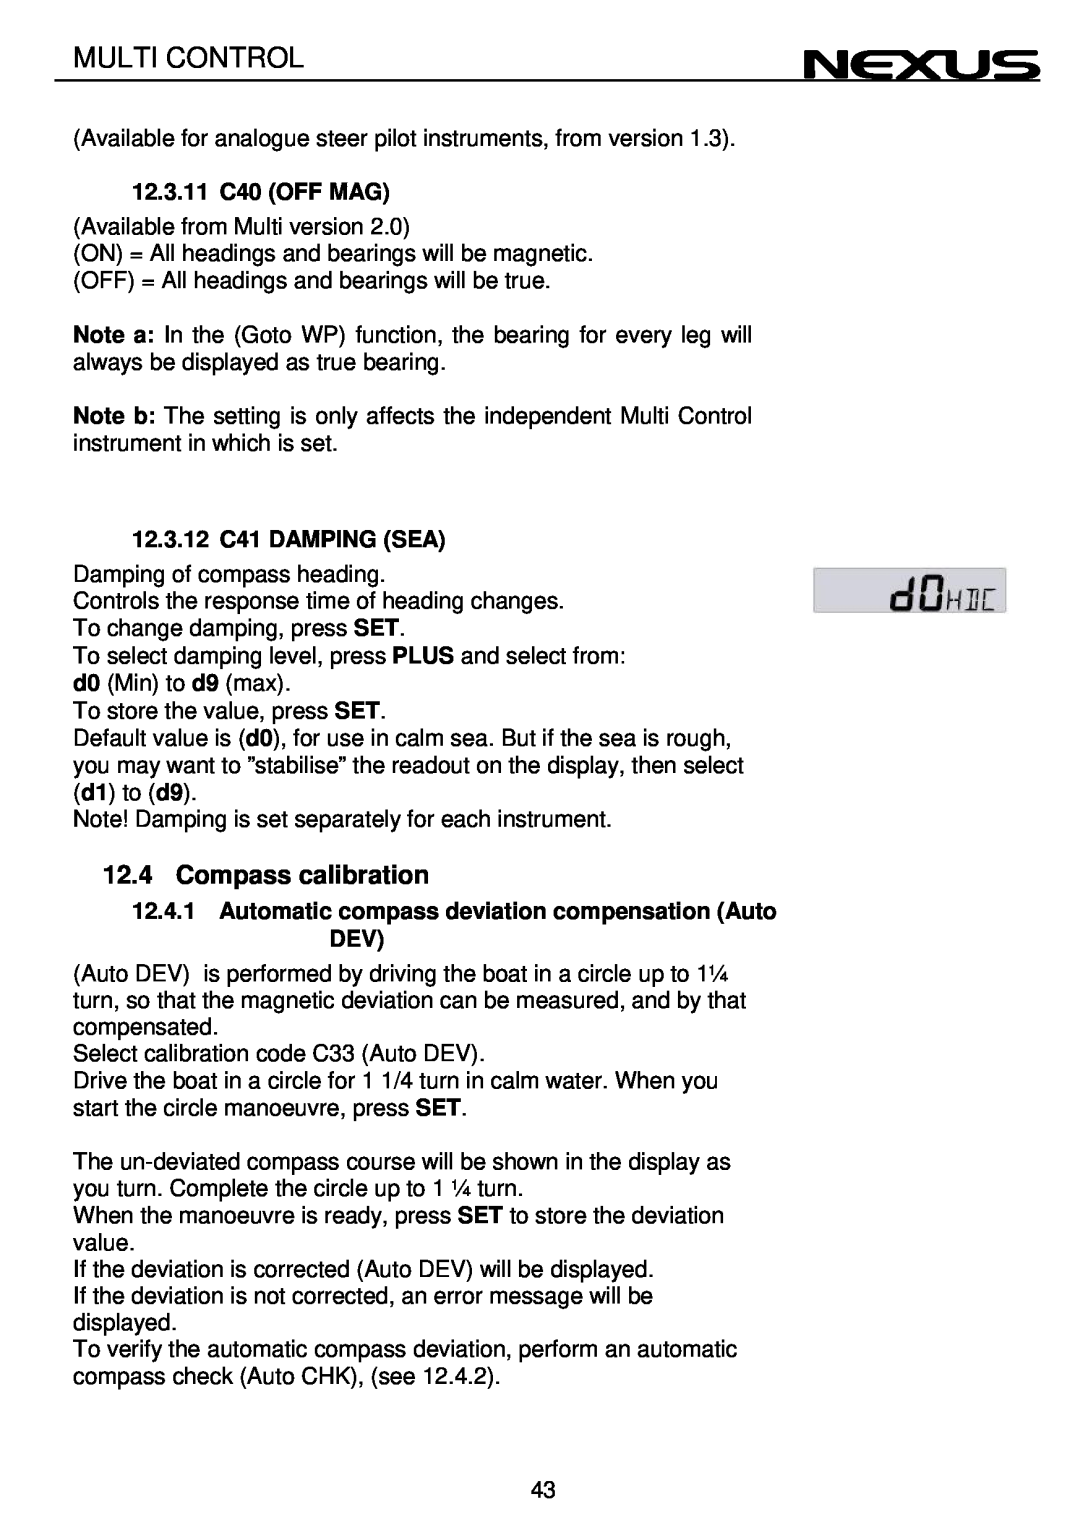 Nexus 21 Multi Control operation manual 12.4Compass calibration, 12.3.11 C40 OFF MAG, 12.3.12 C41 DAMPING SEA 